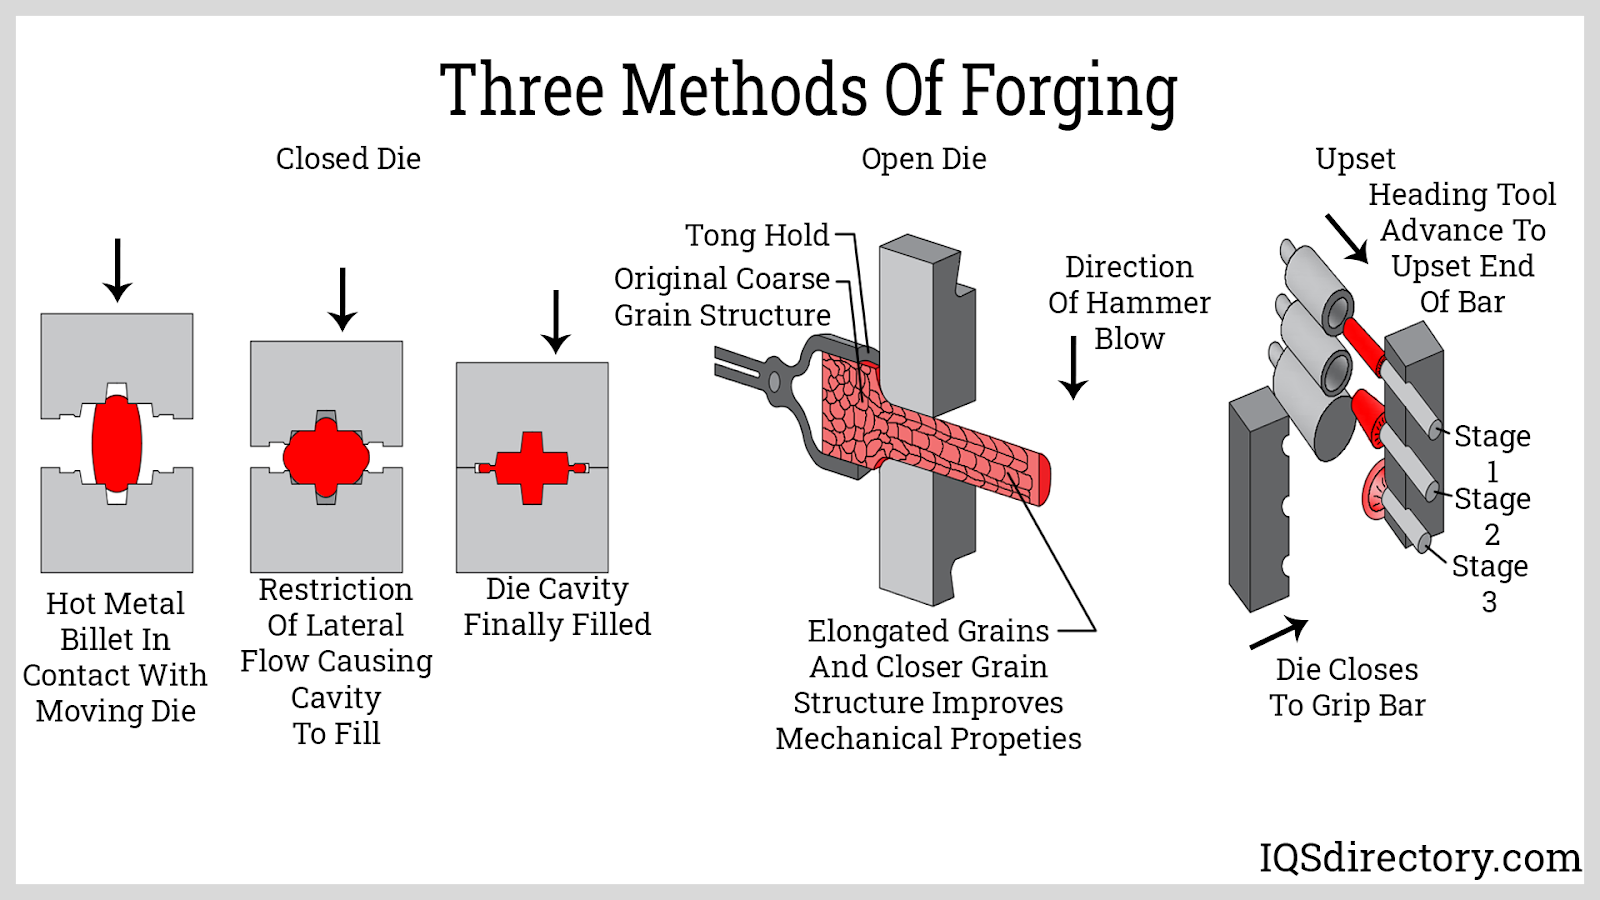 Three Methods of Forging